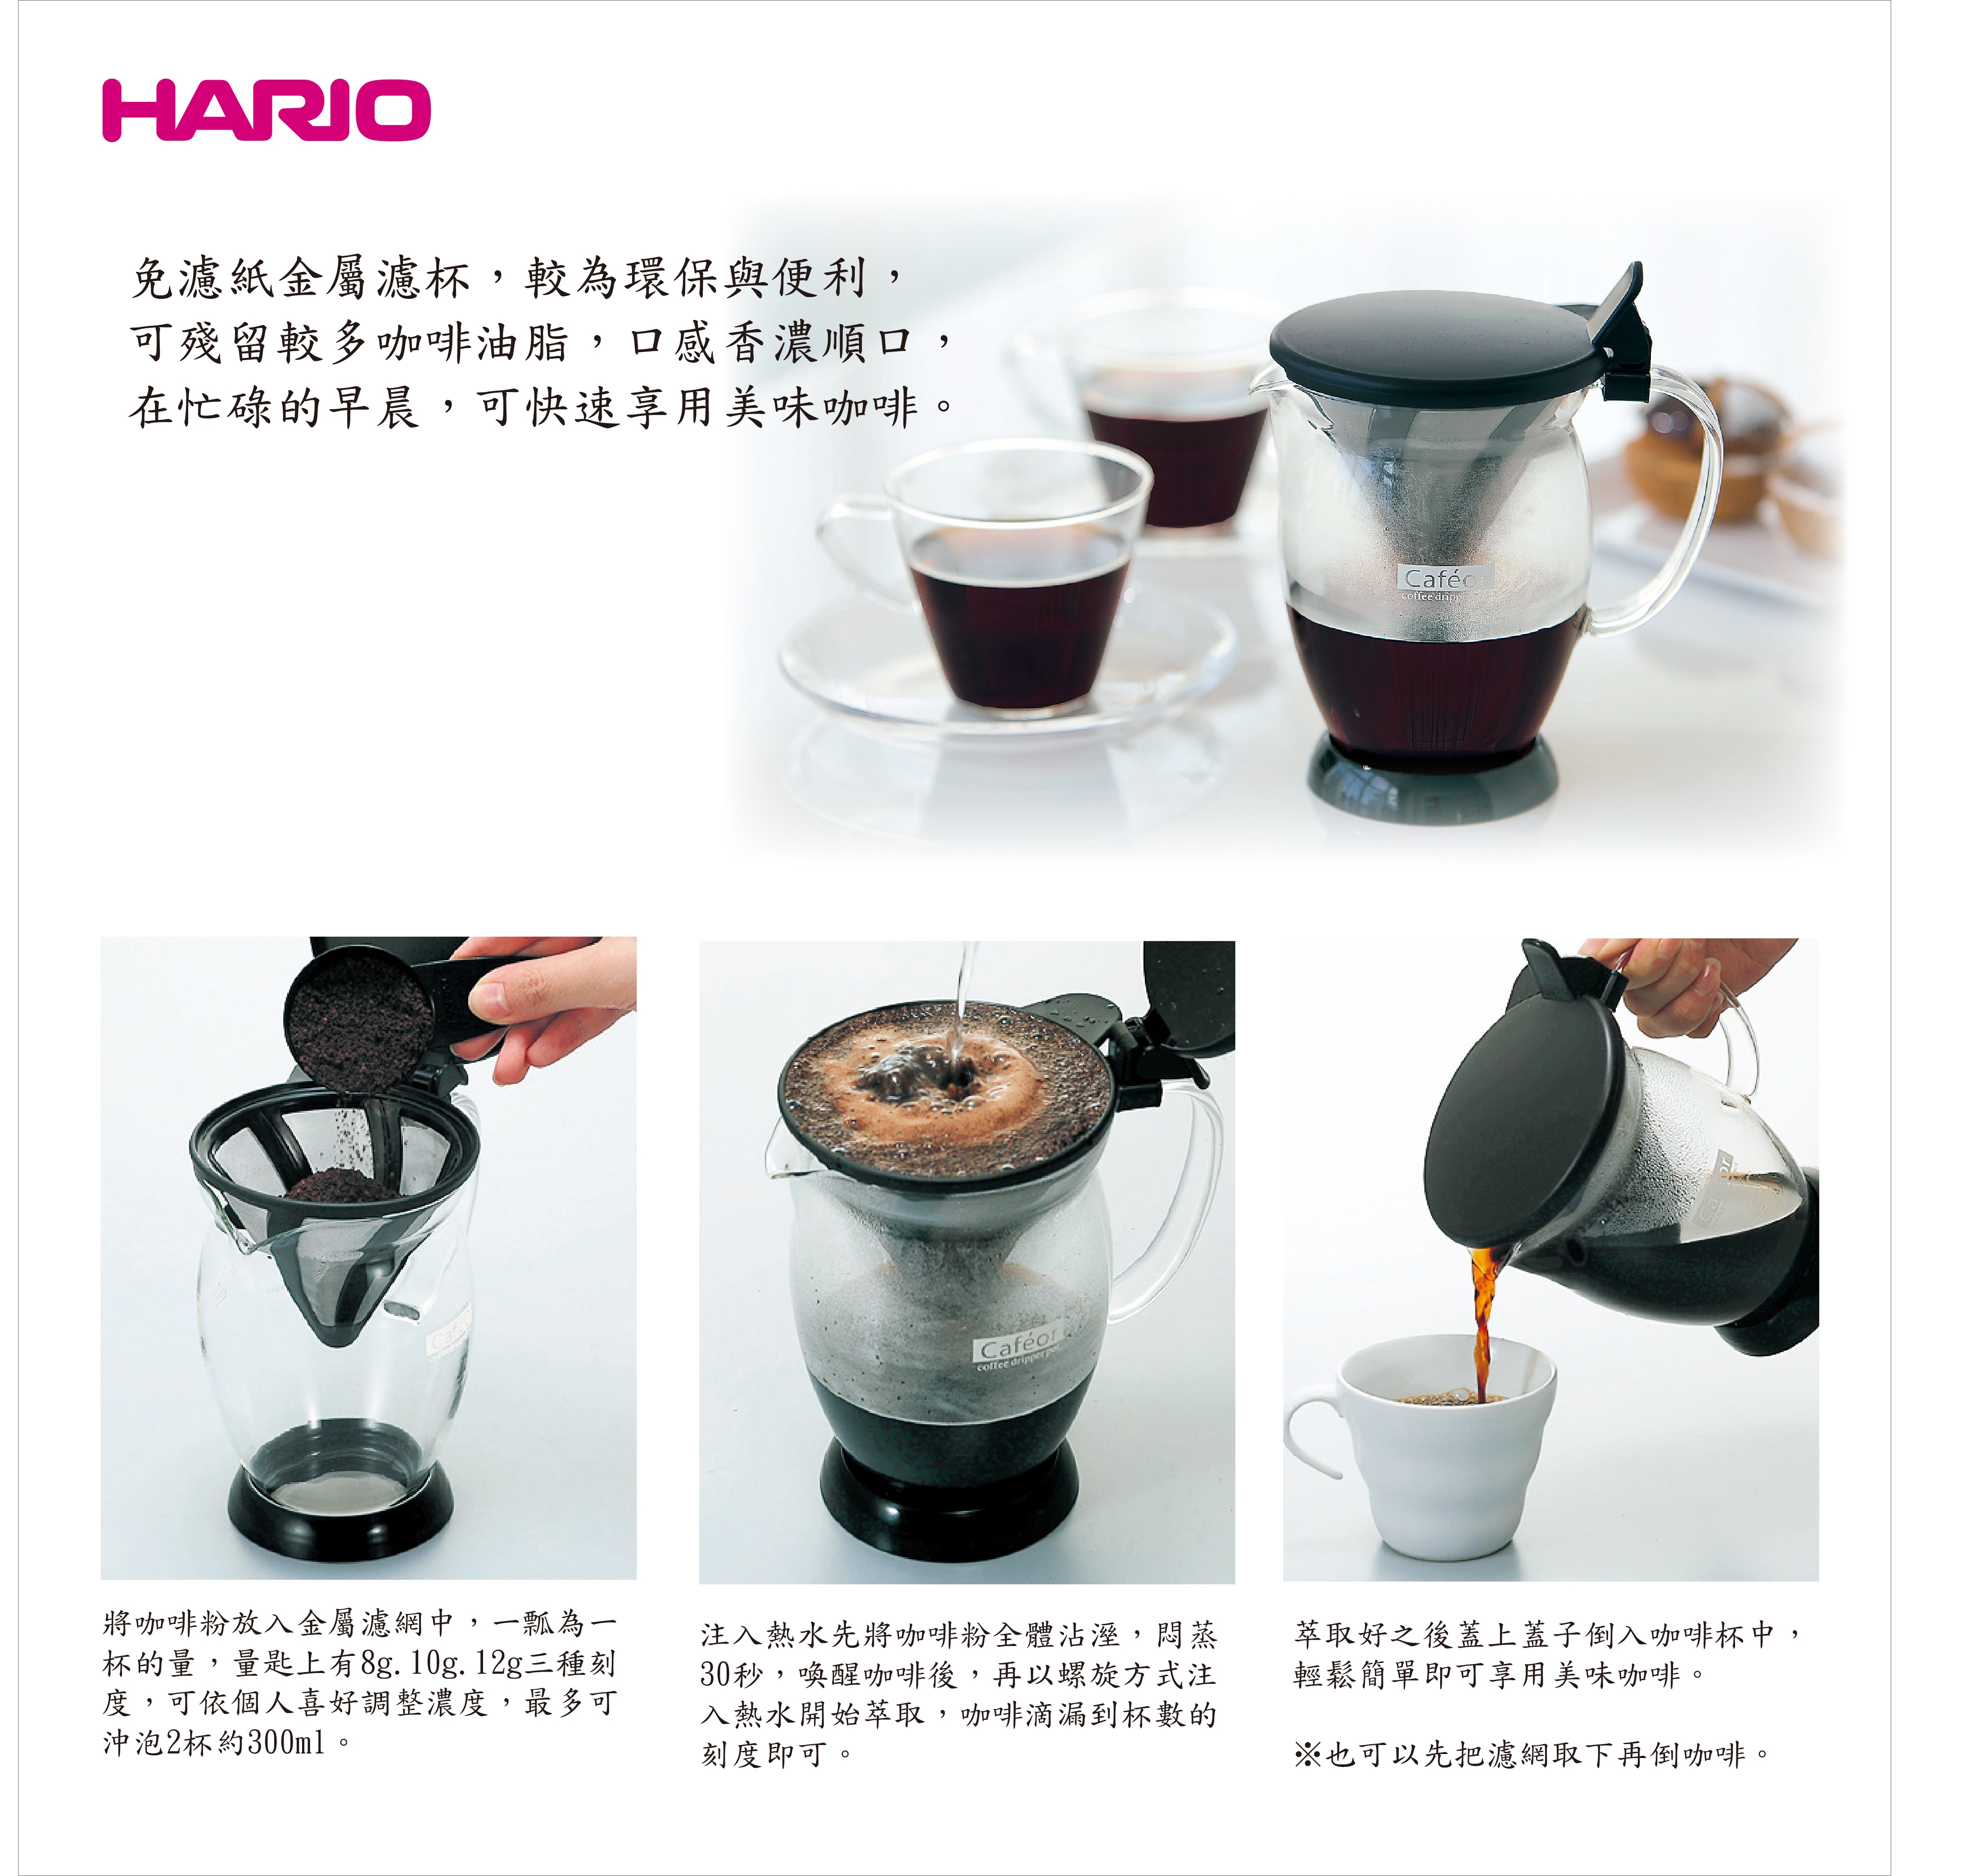 Hario V60免濾紙咖啡分享杯使用免濾紙金屬濾杯,較為環保,可保留較多咖啡油脂,口感更加香濃順口。